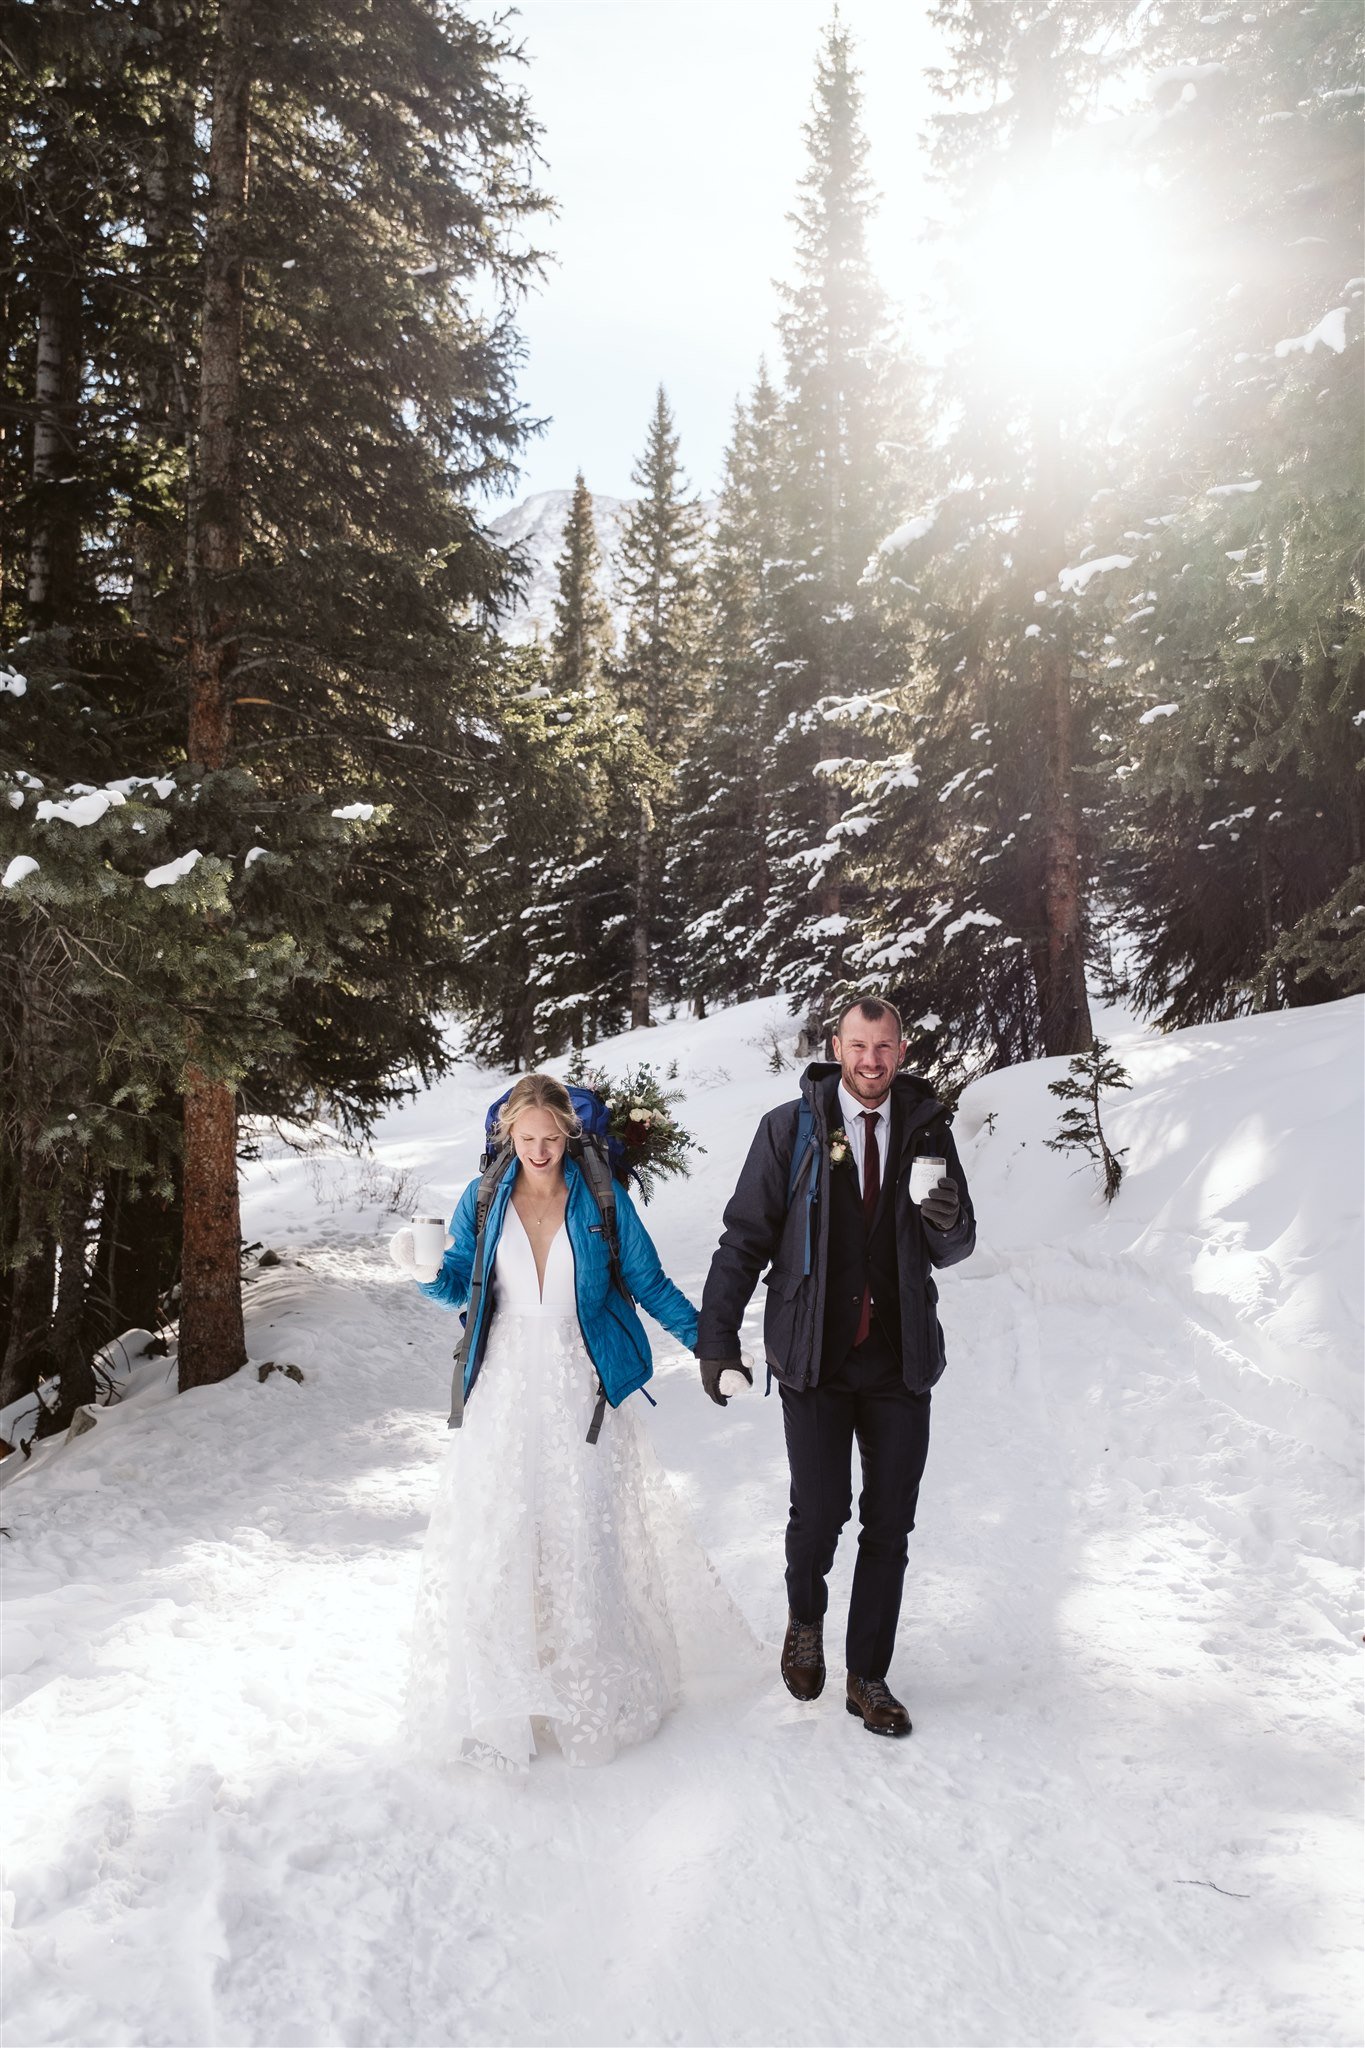  elopement winter hike snow wedding ceremony 